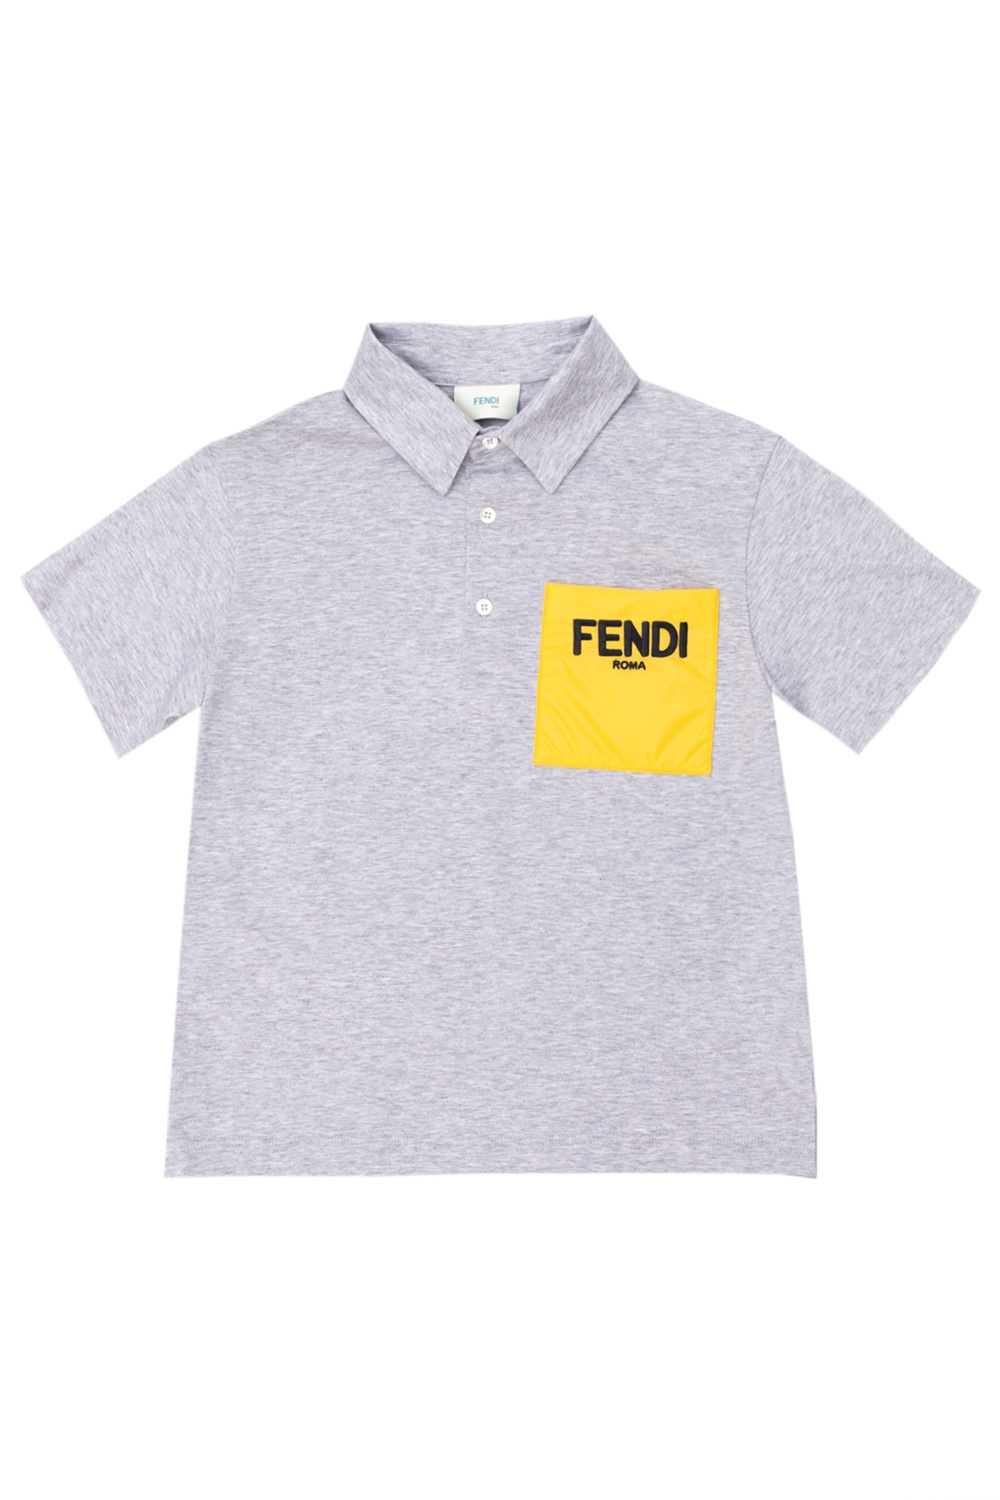 Fendi Kids women clothing wallets mats polo-shirts